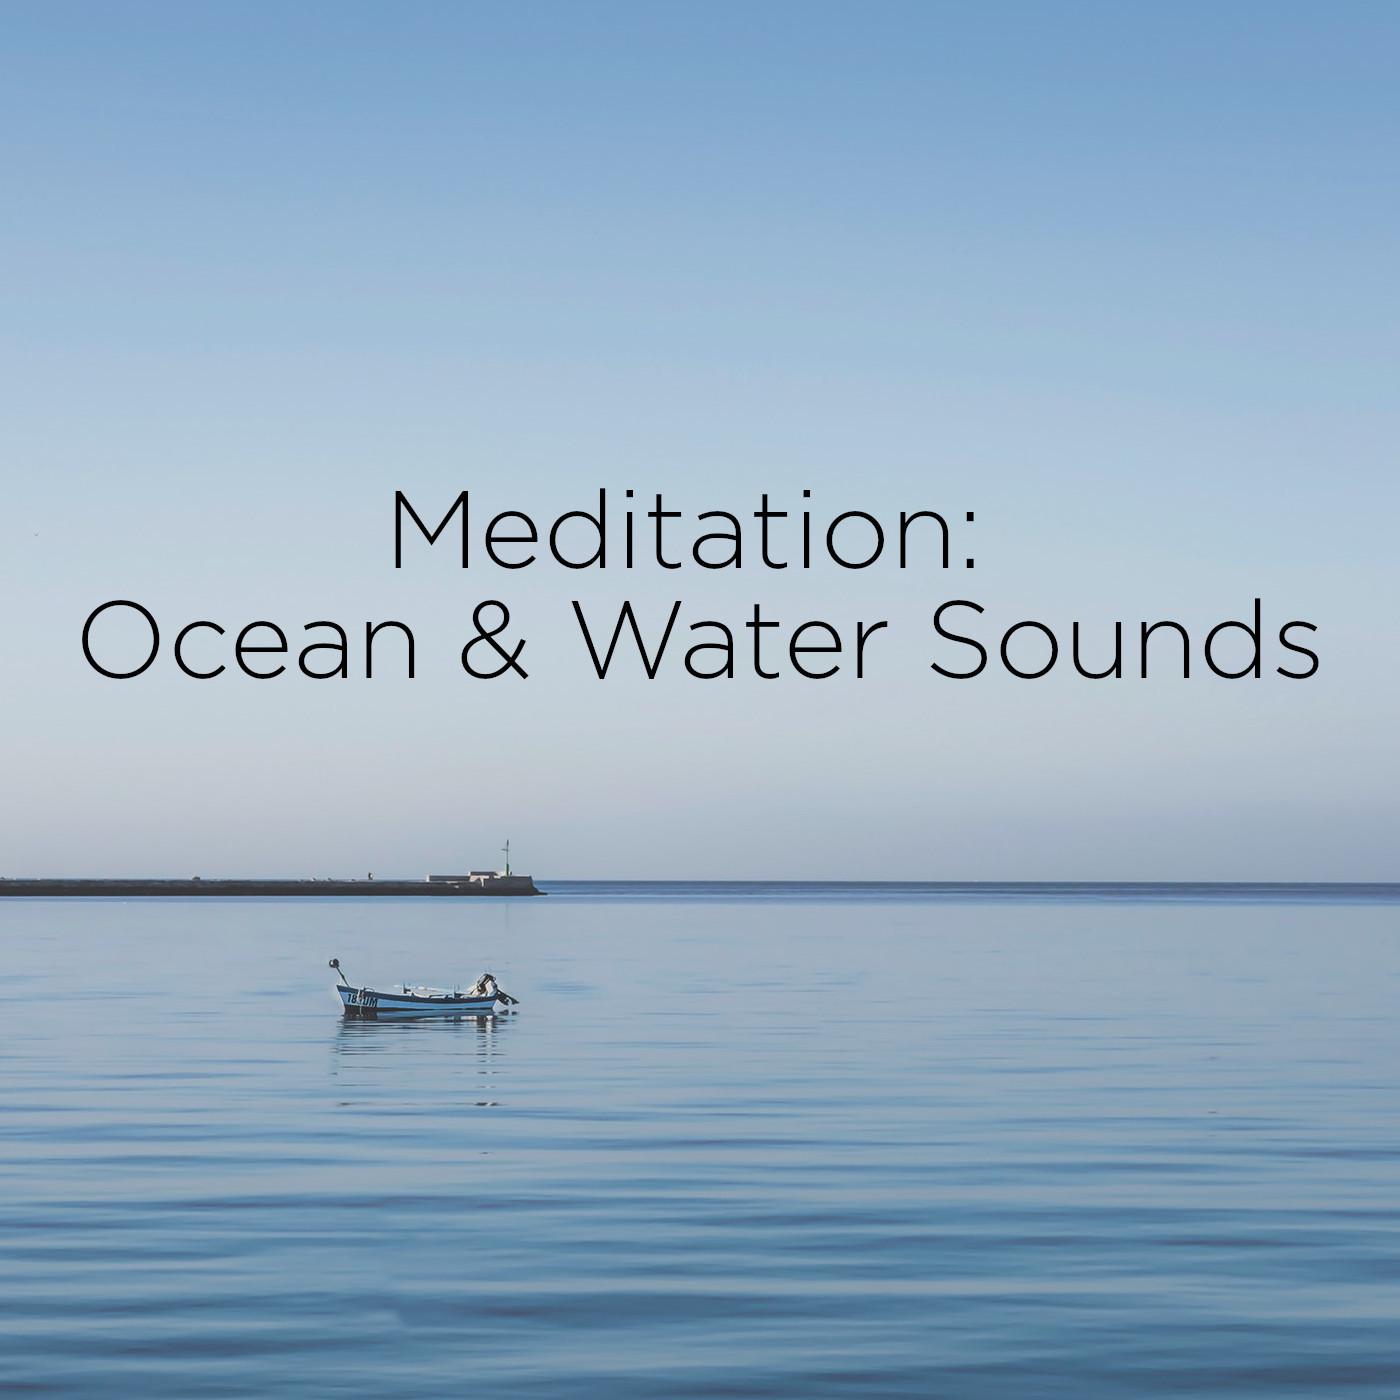 Meditation: Ocean & Water Sounds